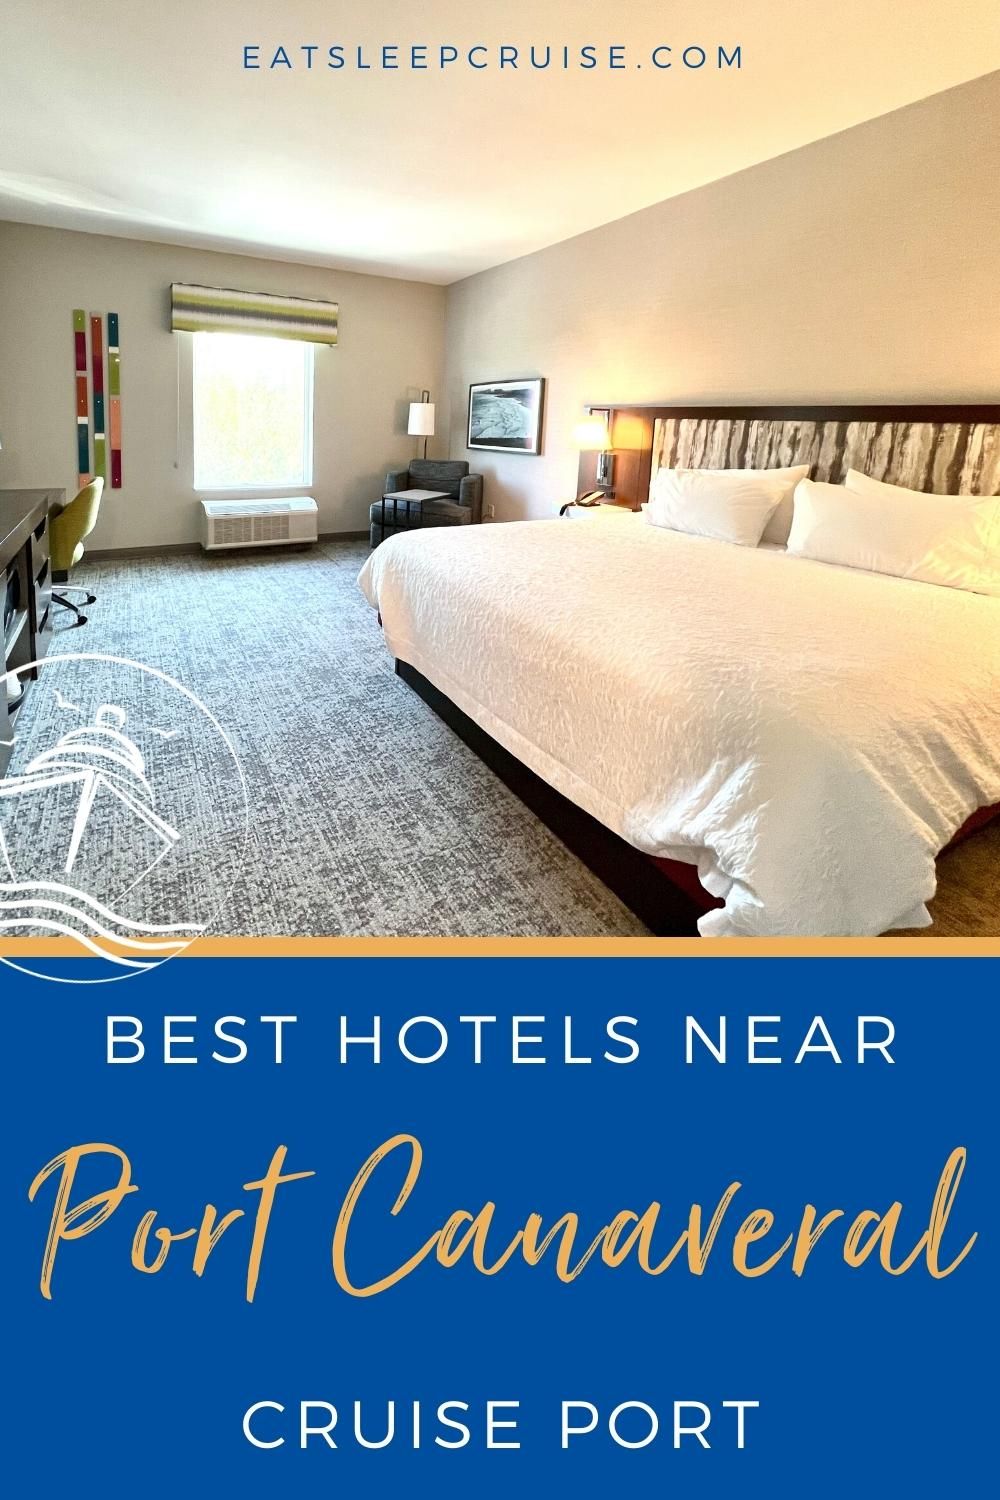 Best Hotels Near Port Canaveral Cruise Port | Eat Sleep Cruise